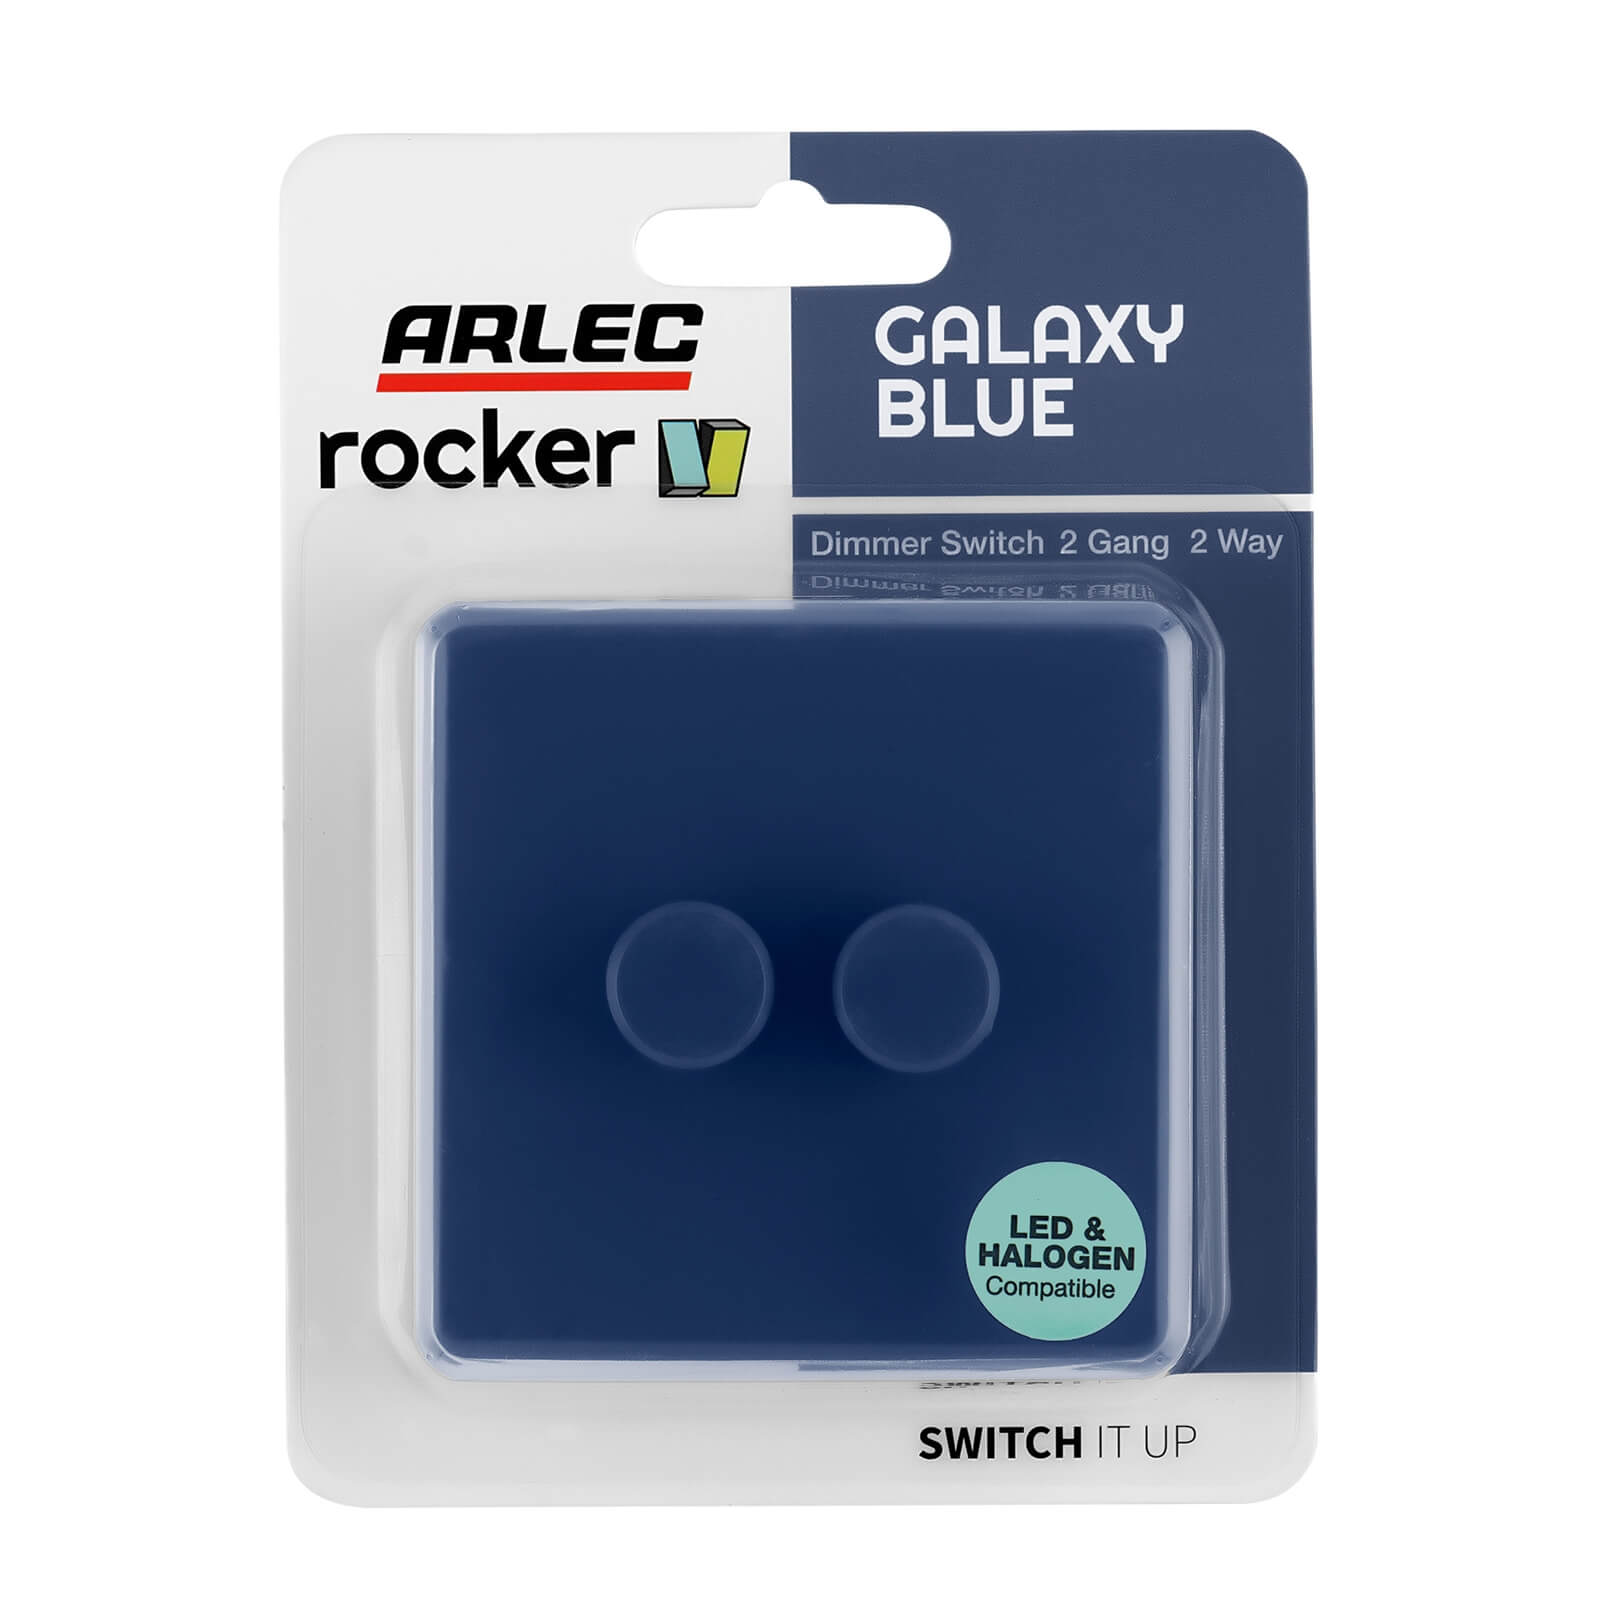 Arlec Rocker 2 Gang 2 Way Galaxy Blue Dimmer switch